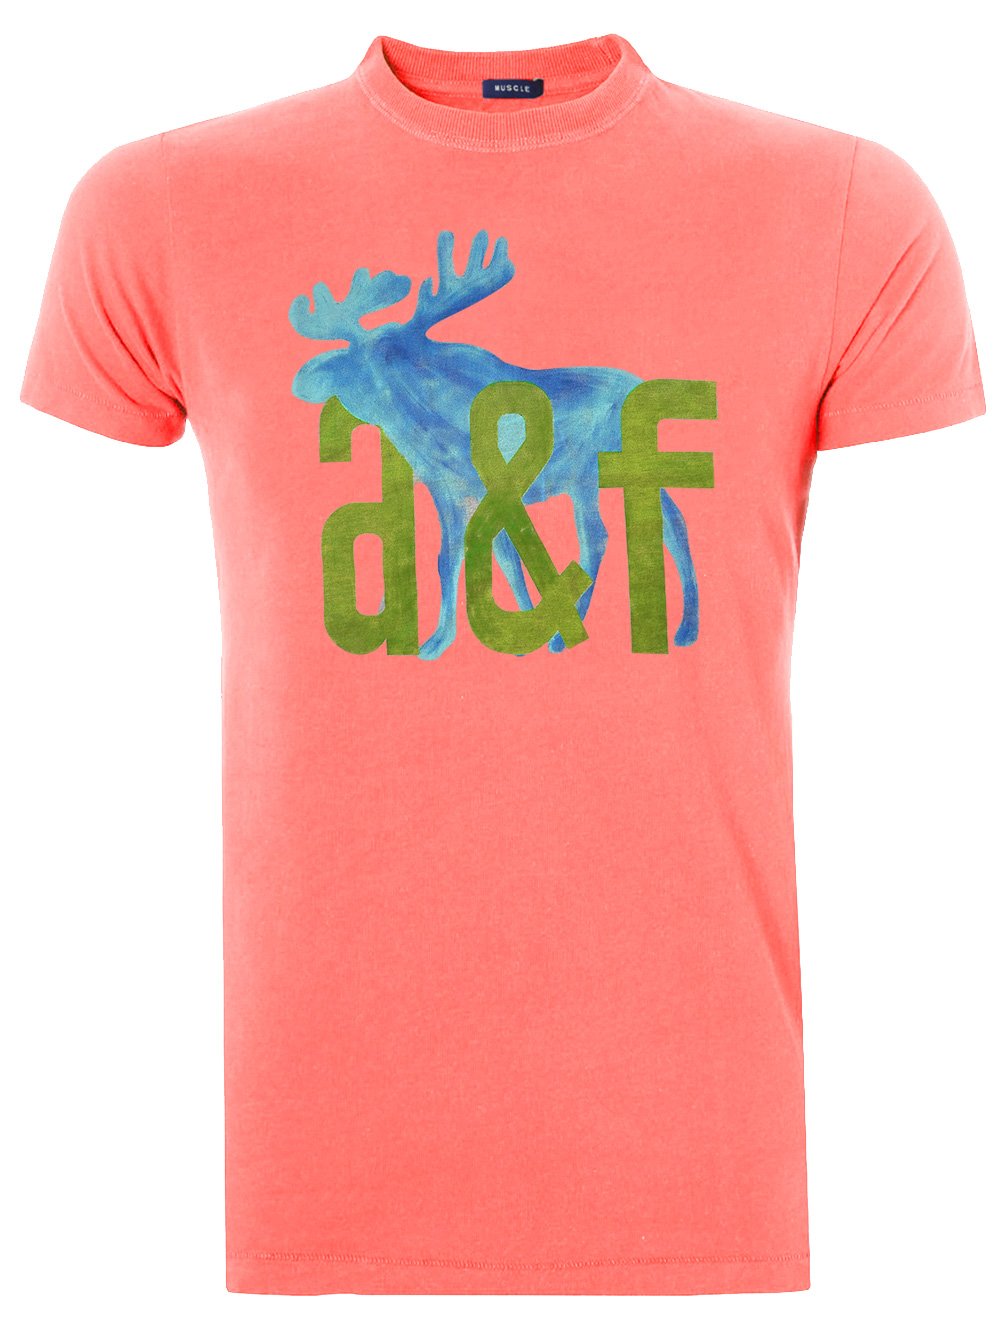 Camiseta Abercrombie Masculina Muscle Watercolor A&F Moose Rosa Mescla